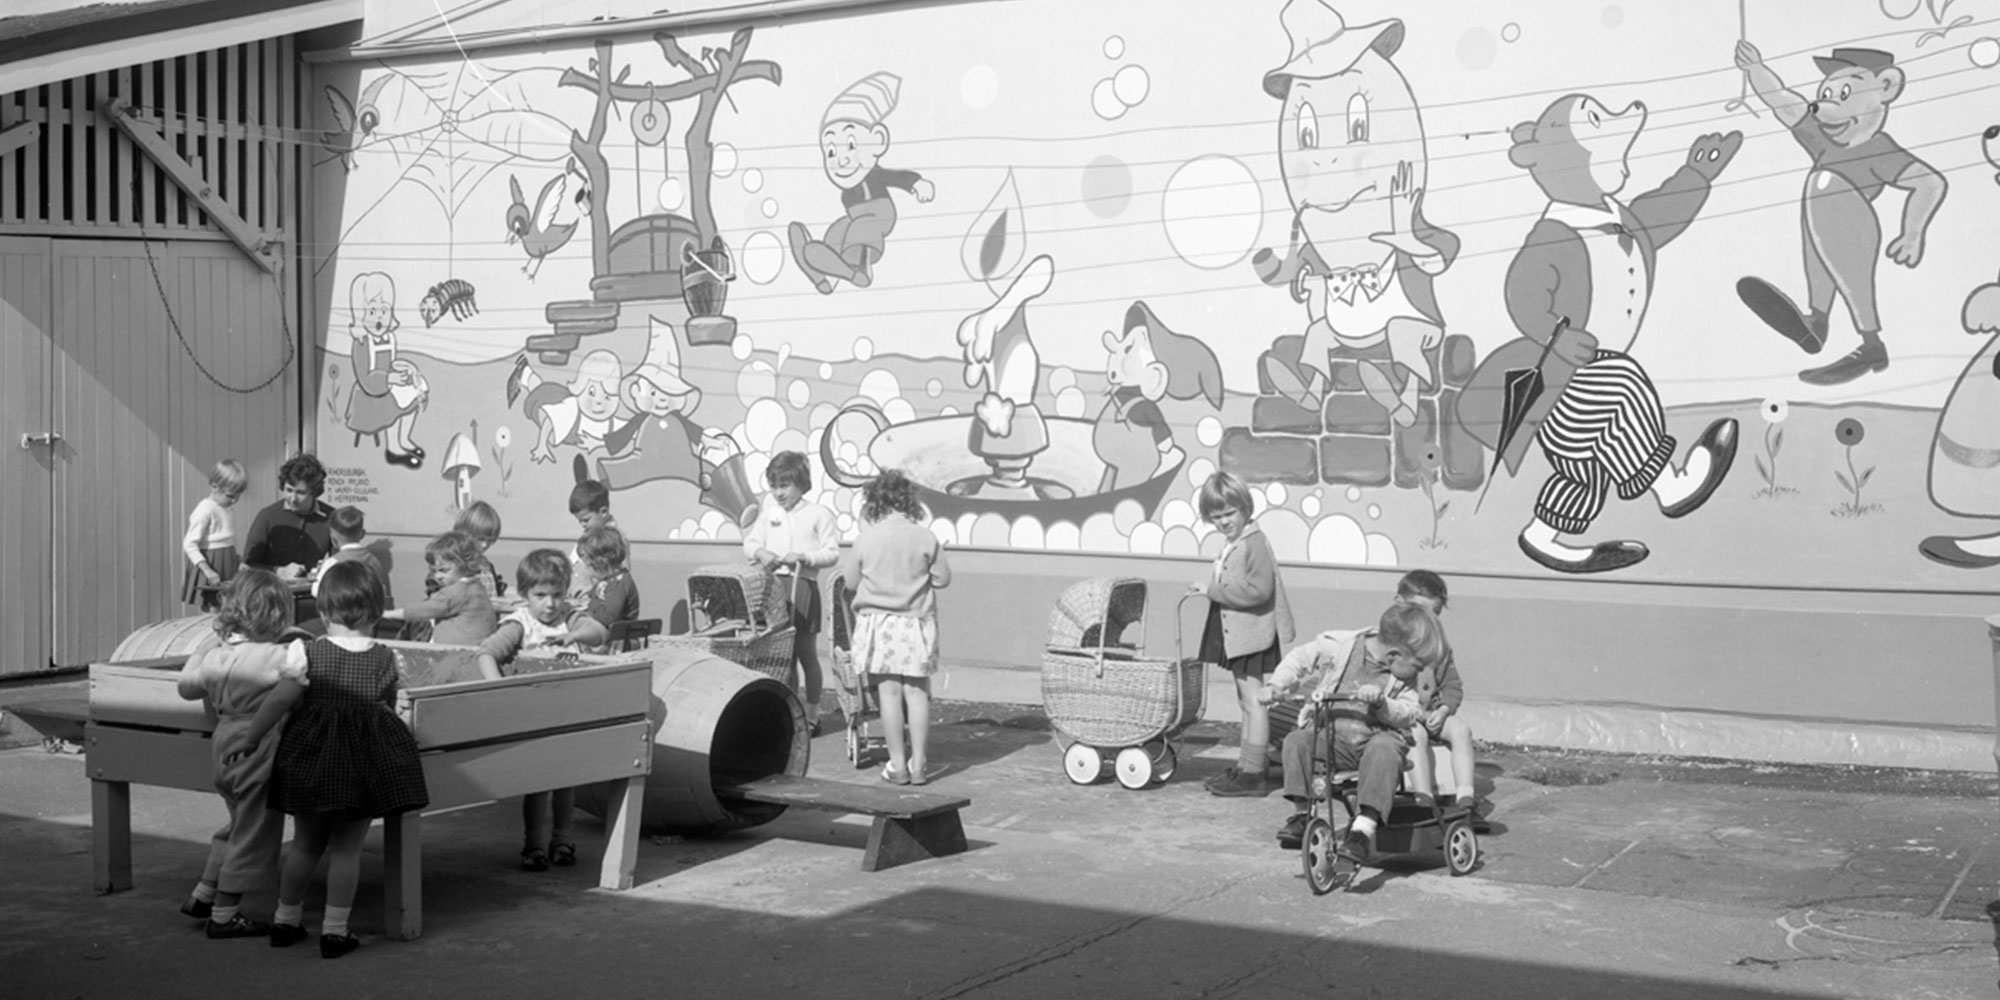 Boys on Tricycles – Kindercraft Civic Nursery, 10 August 1950, image courtesy Brisbane City Council.